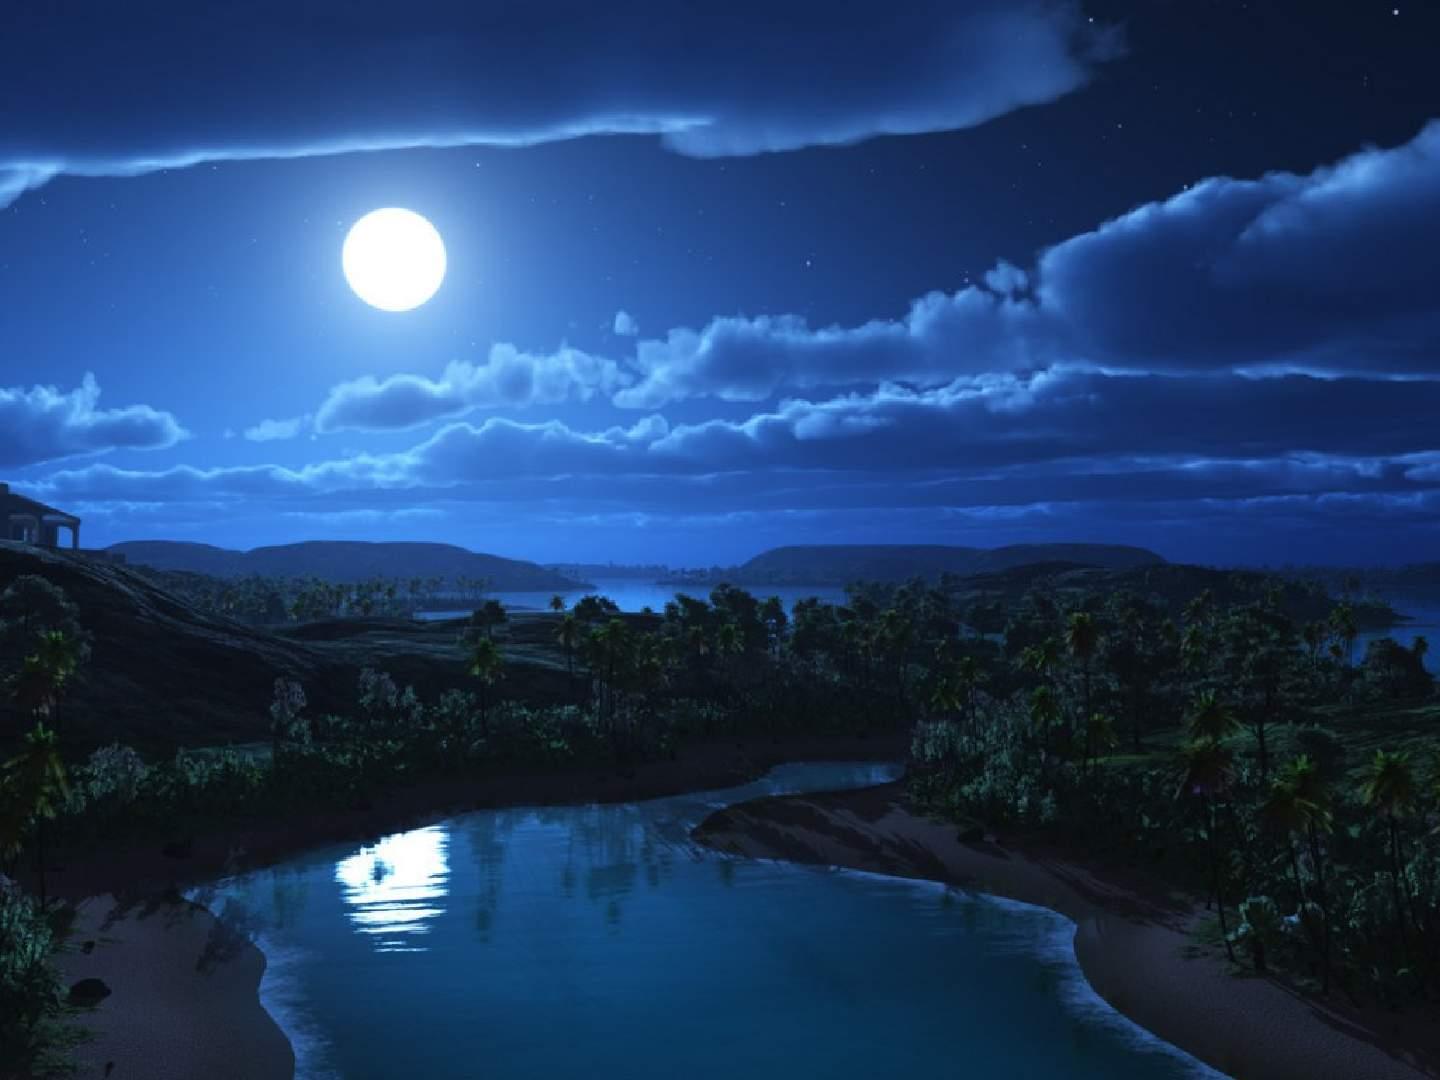 Night sky scenic wallpaper moonlight over pond free desktop